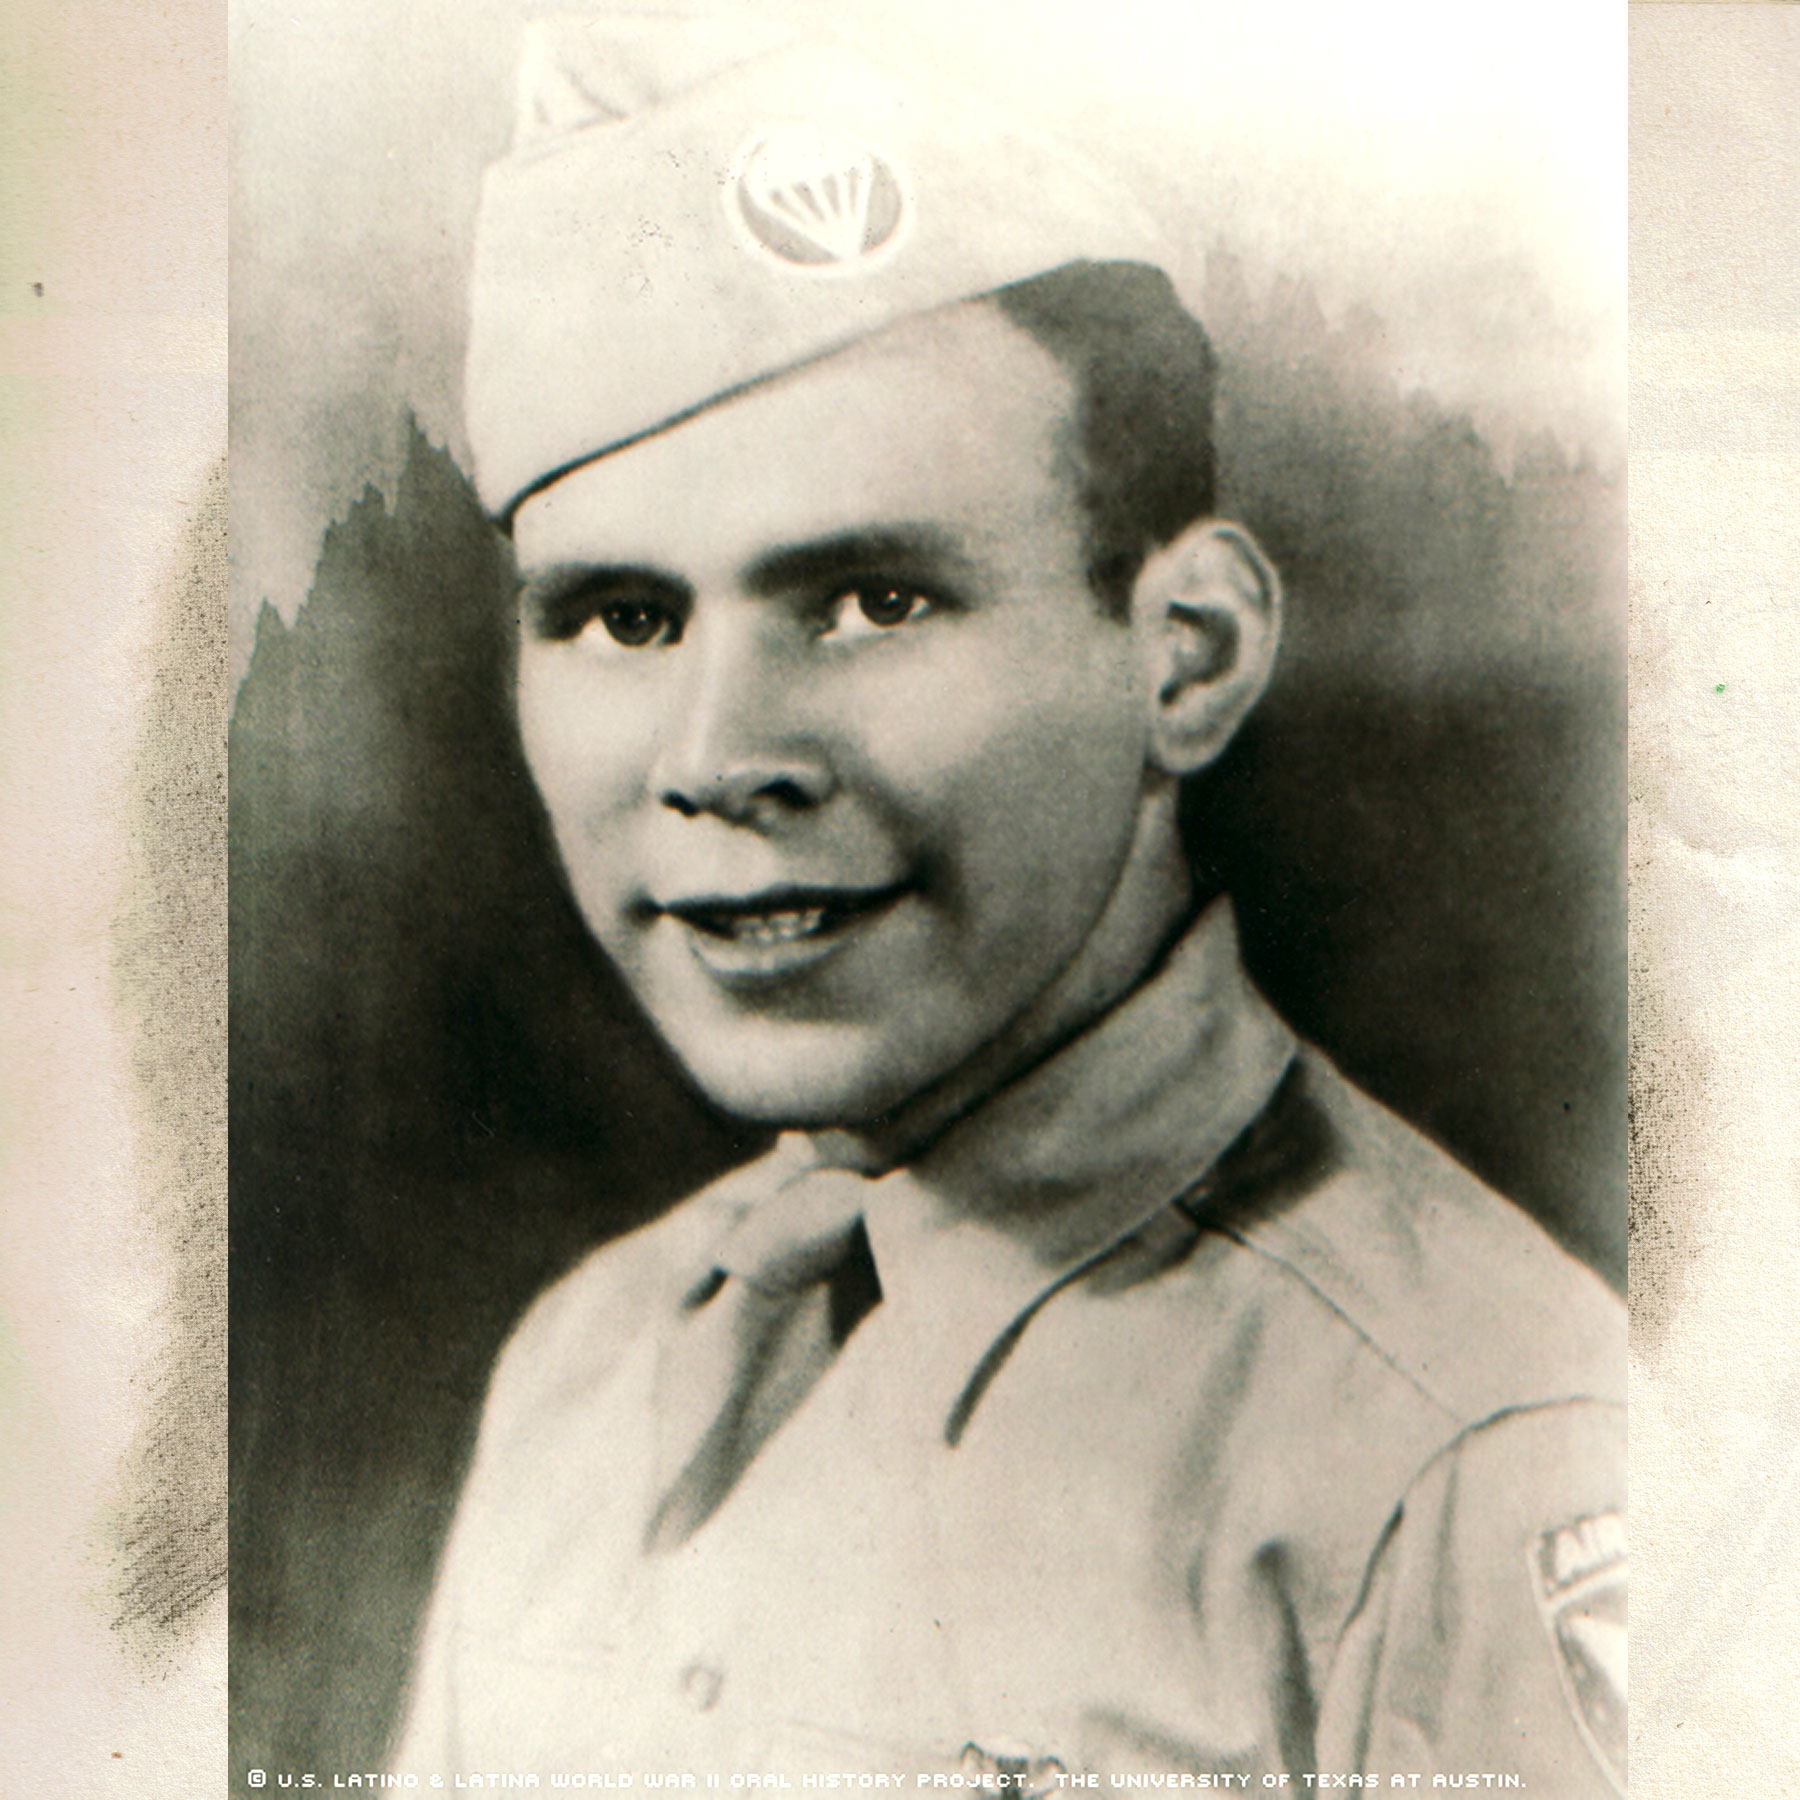 PFC Manuel Perez - Medal of Honor